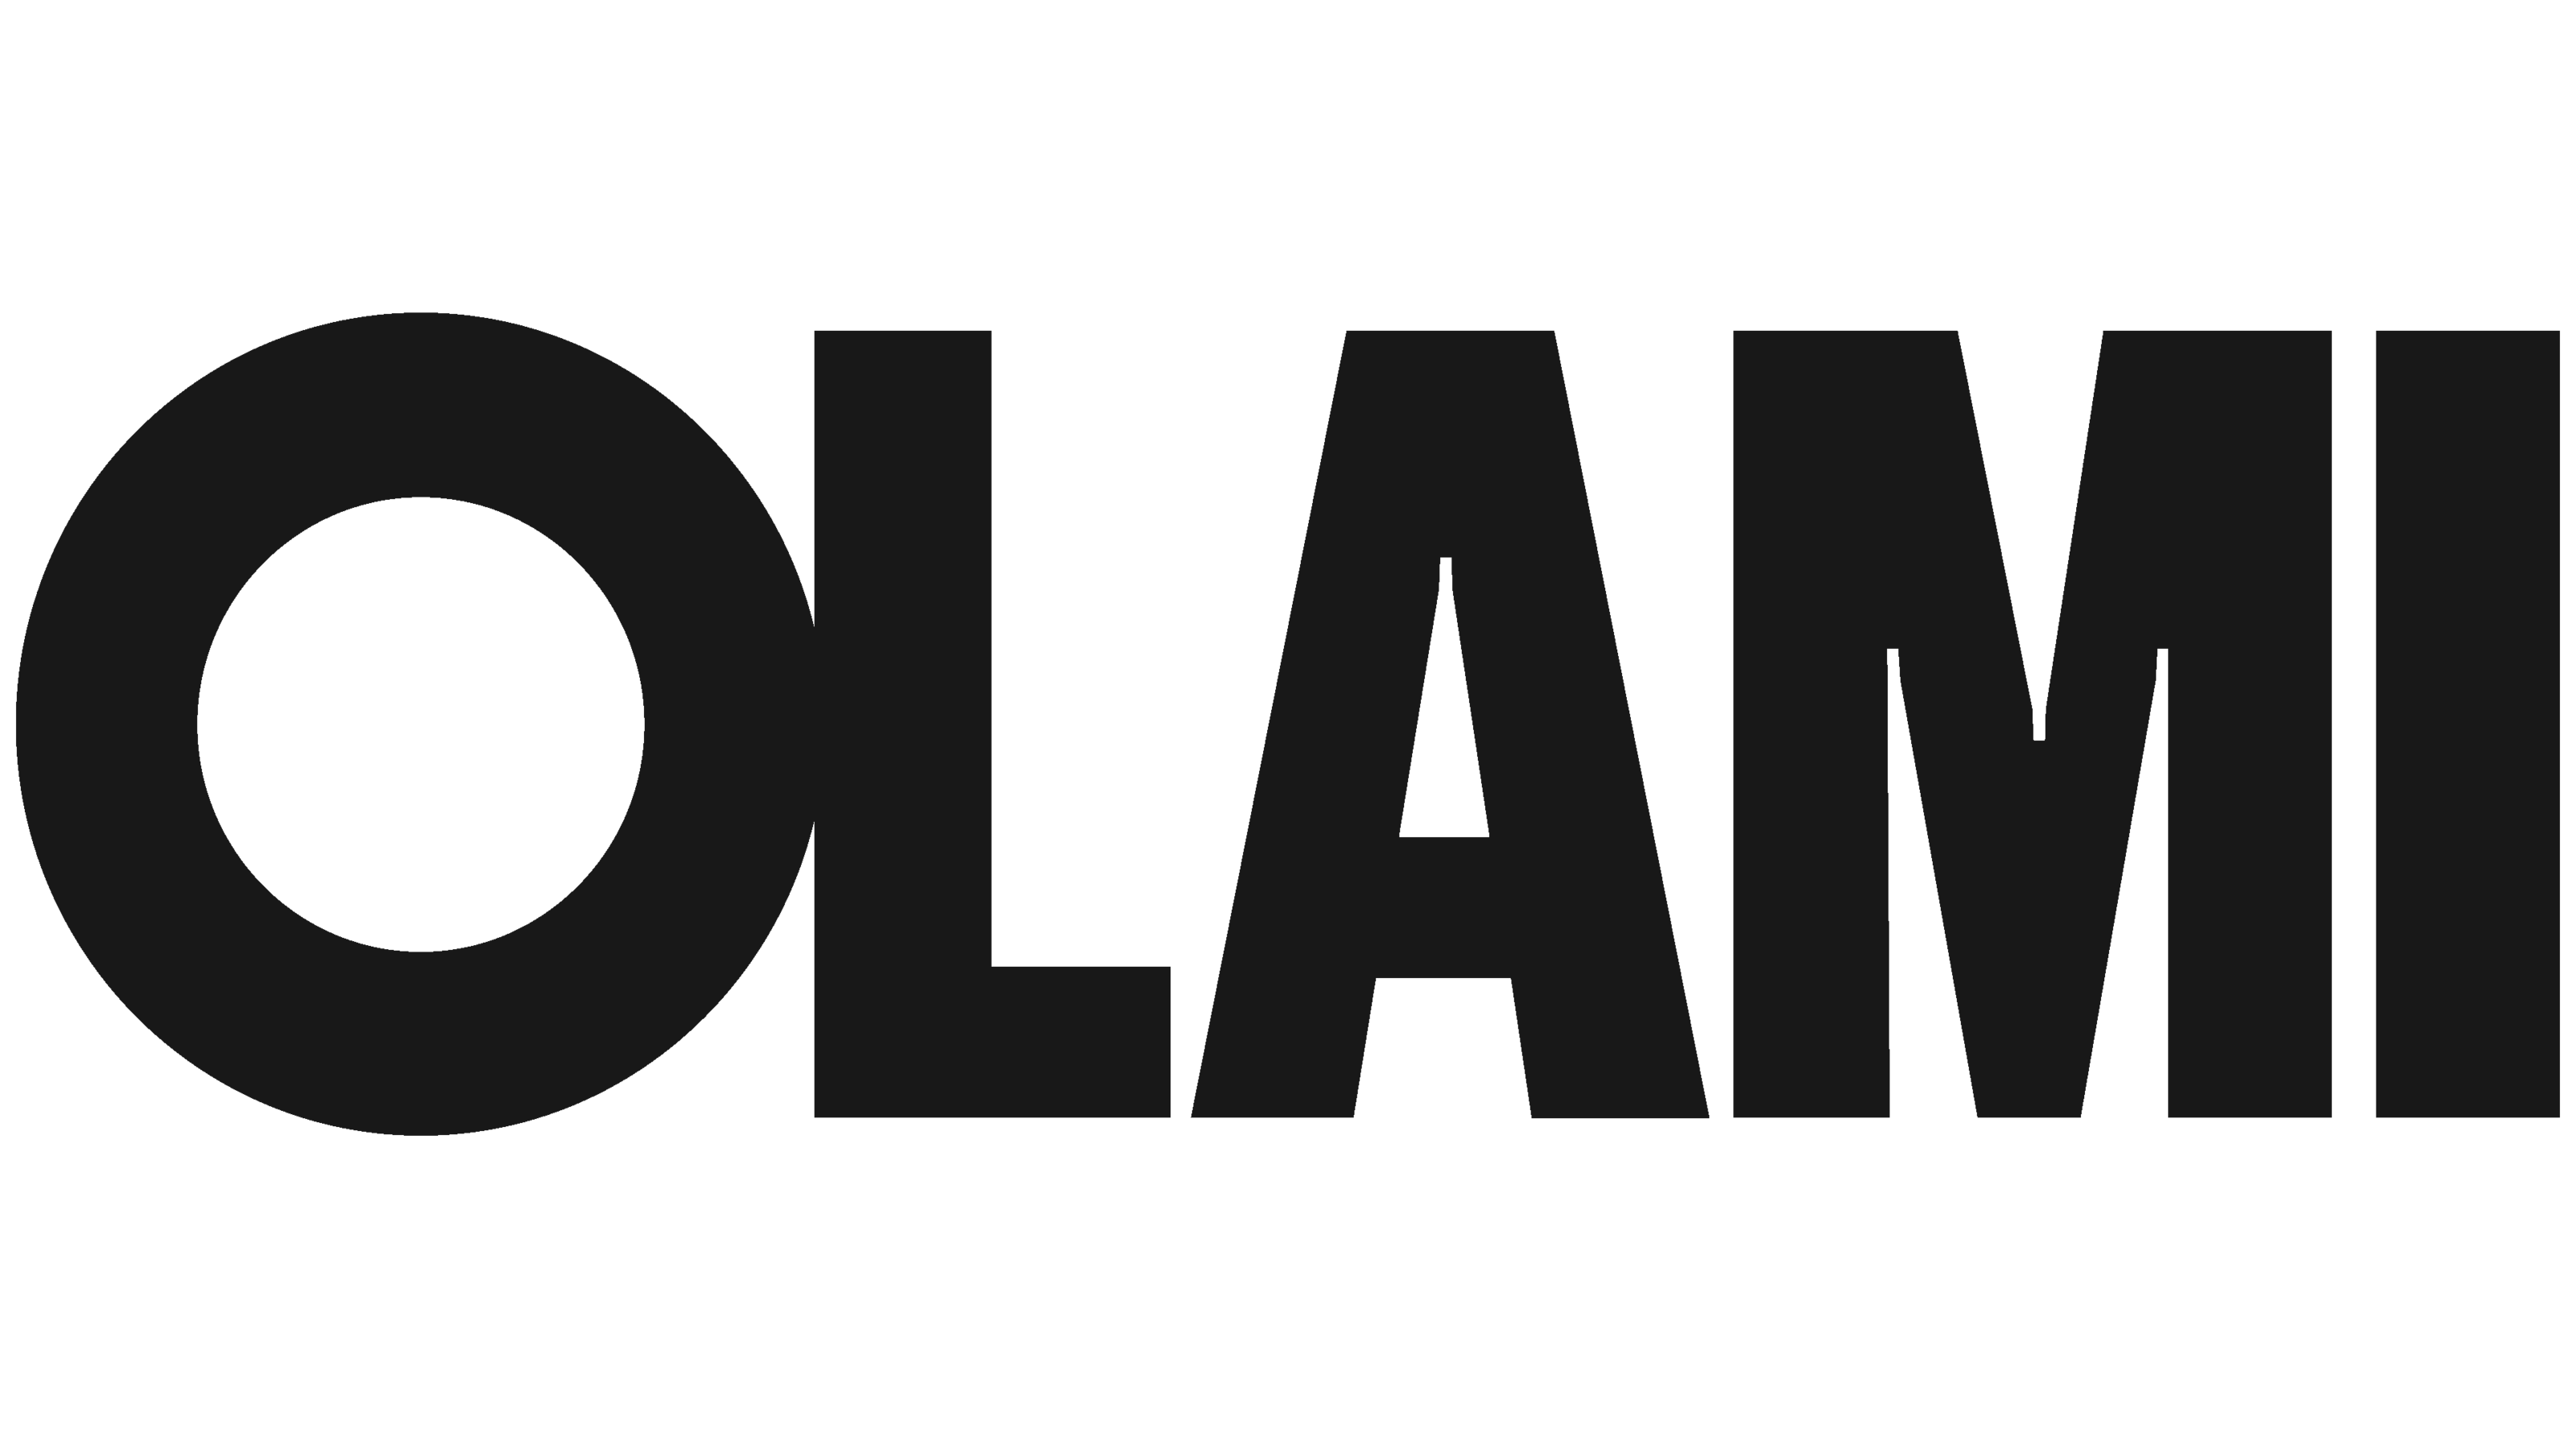 Olami-Logo